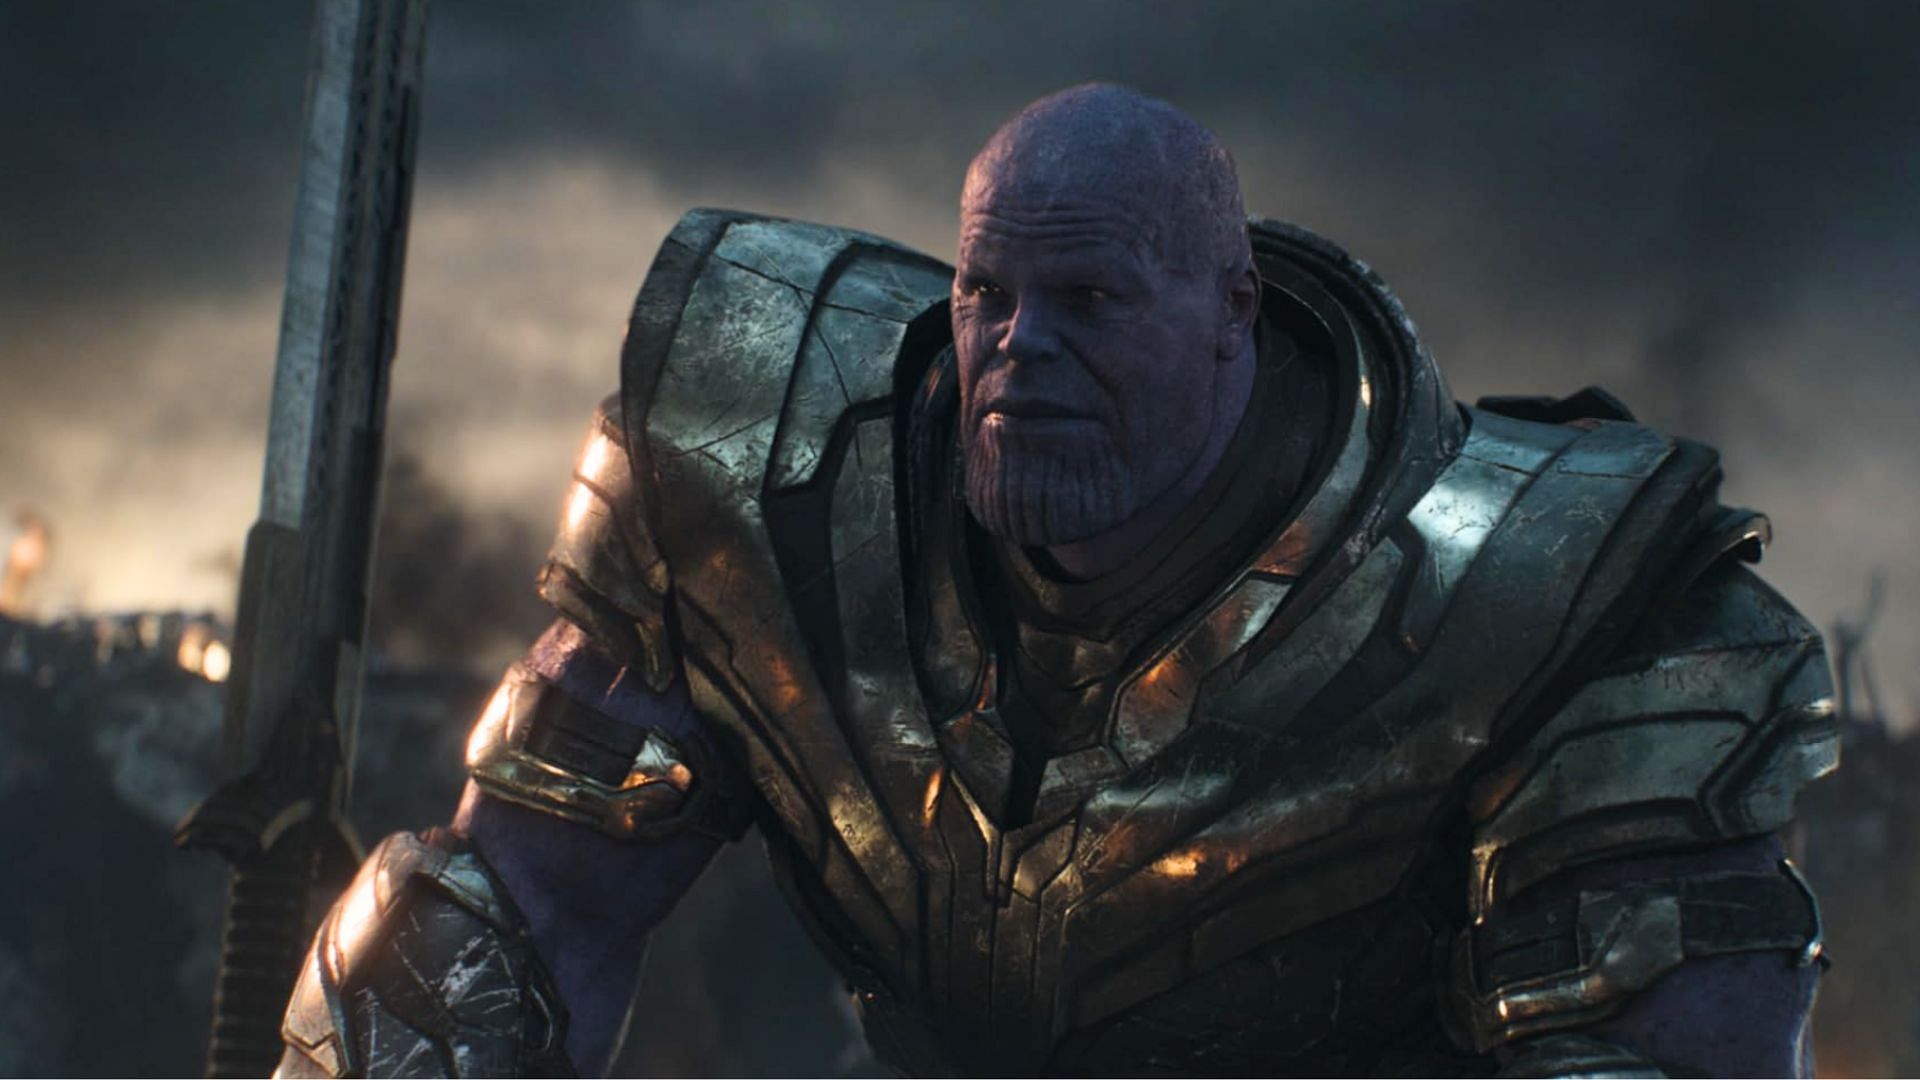 Marvel Studios is not responding to rumors about Thanos&#039; return. (Image via Marvel Studios)